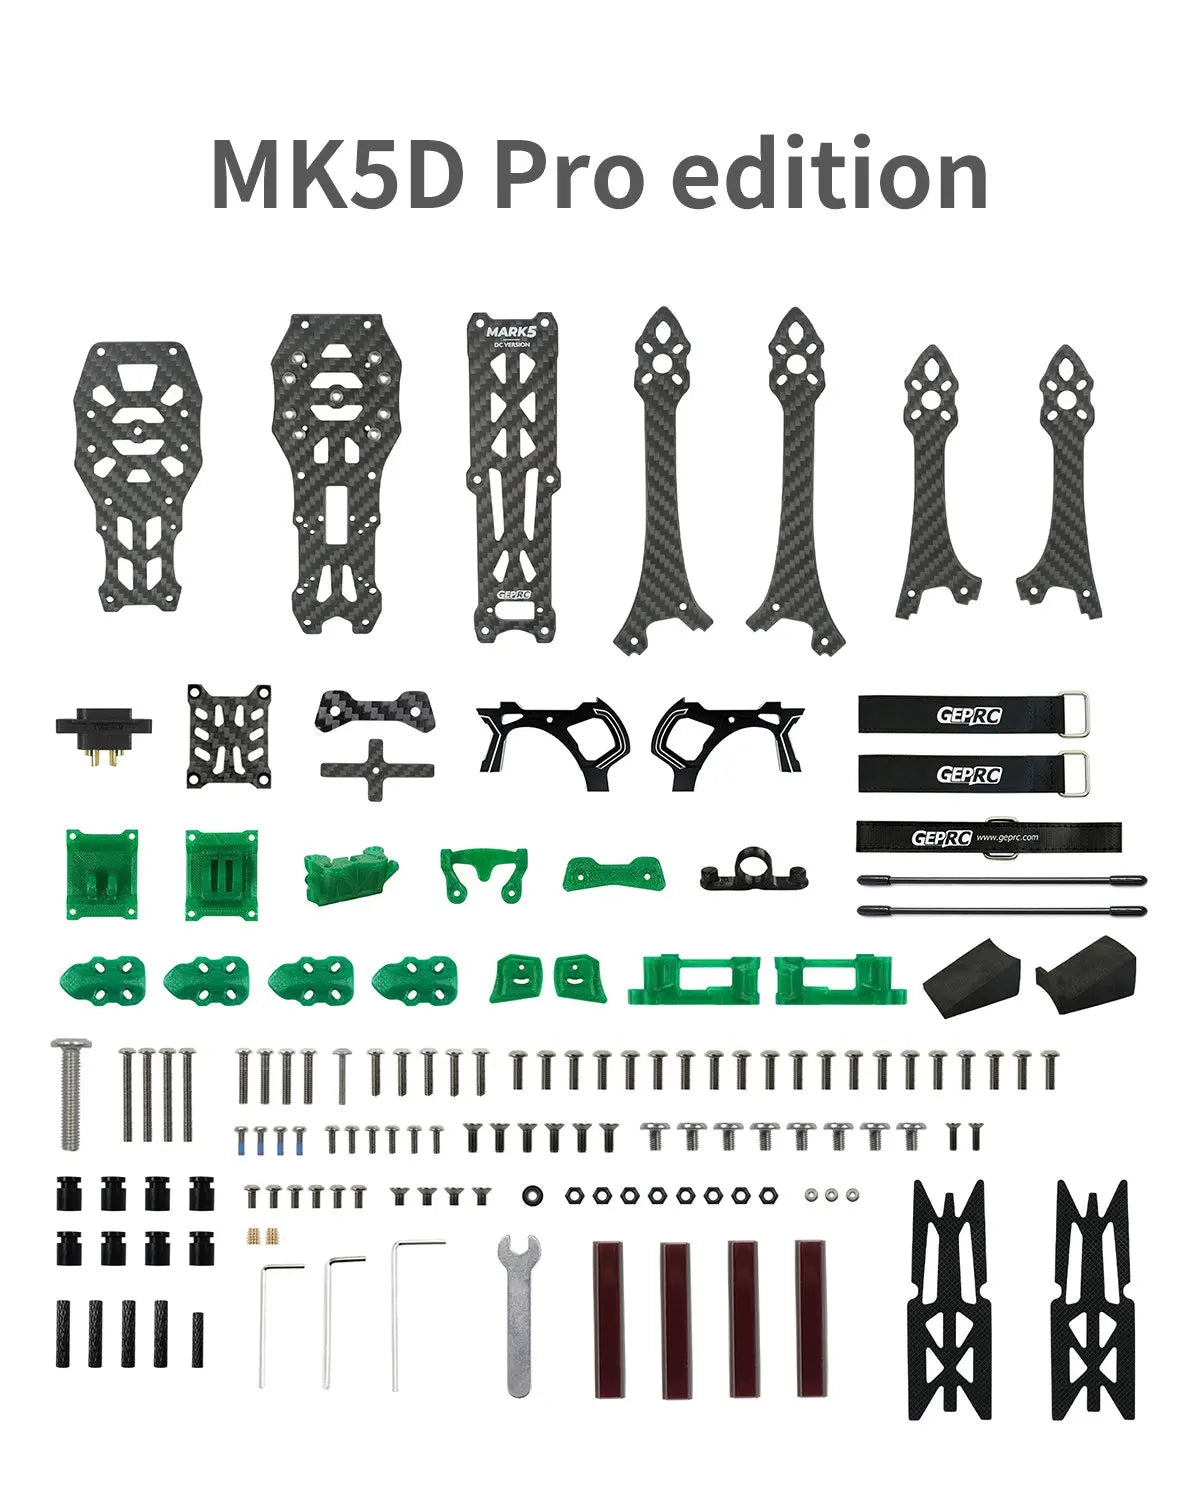 GEP-MK5D O3 MK5X to MK5D Conve DeadCat Frame, MKSD Pro edition MARKS GEPRC bYrG GEPRP